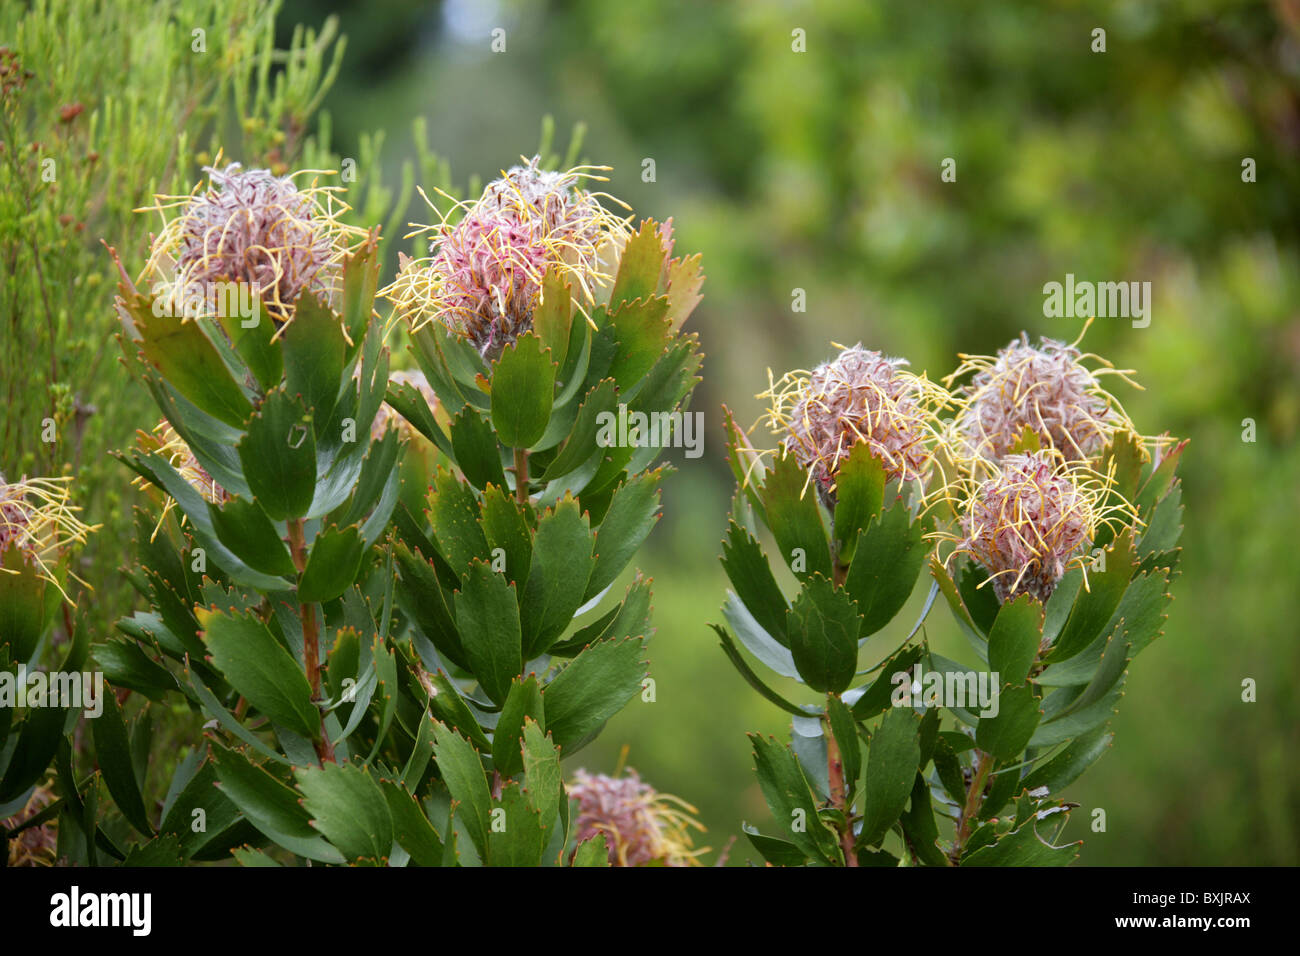 Outeniqua Pincushion Protea, Leucospermum glabrum, Proteaceae. Western Cape, South Africa. Mountain Fynbos. Stock Photo